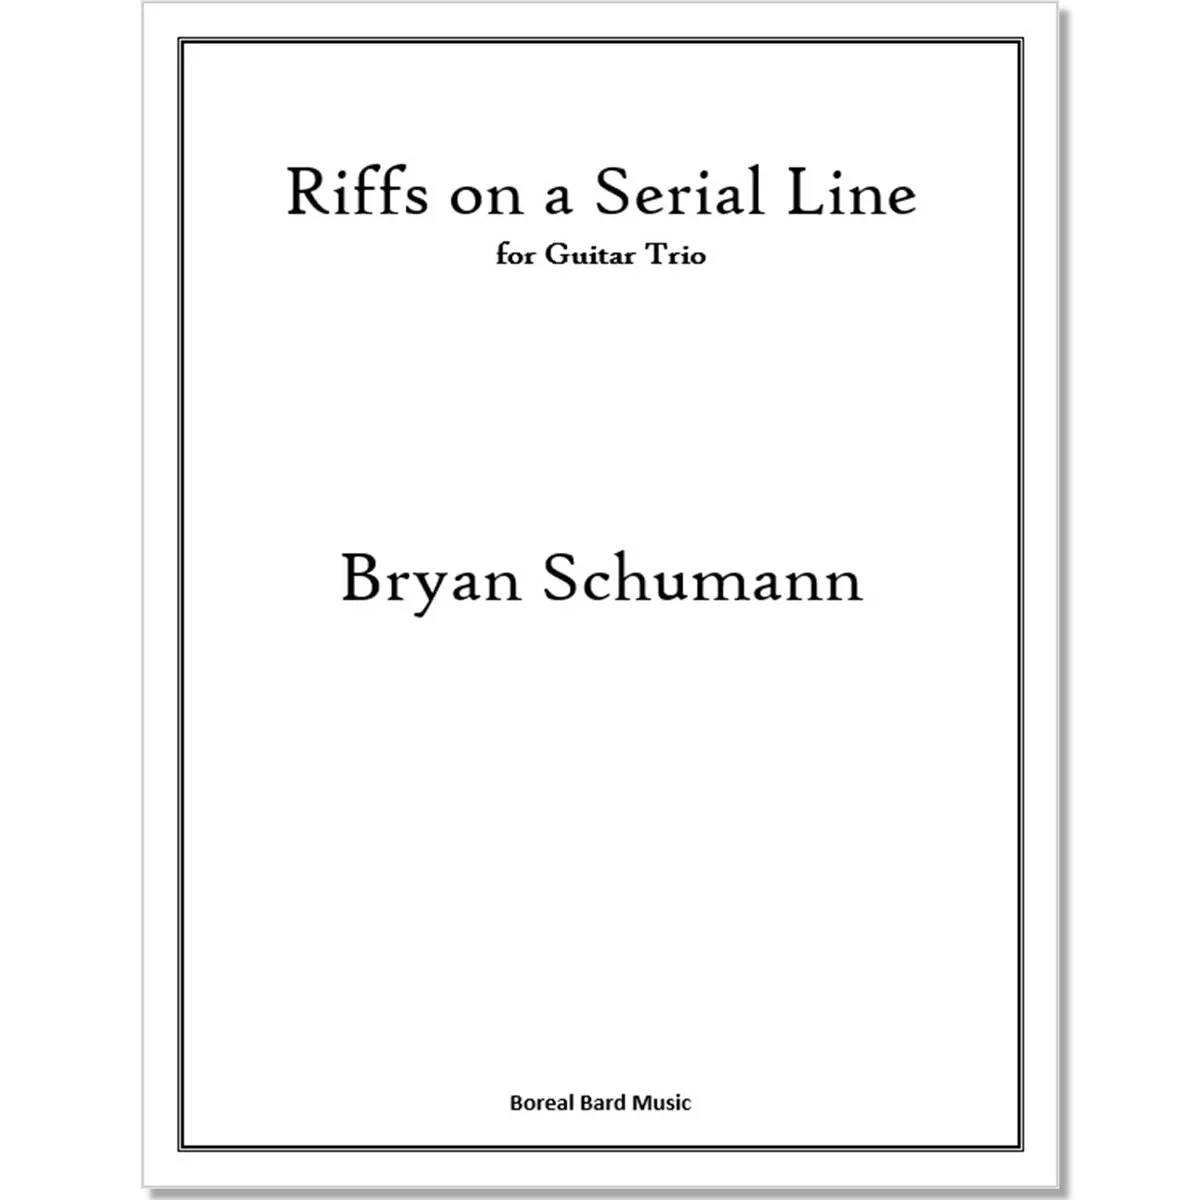 Riffs on a Serial Line for Guitar Trio (sheet music)